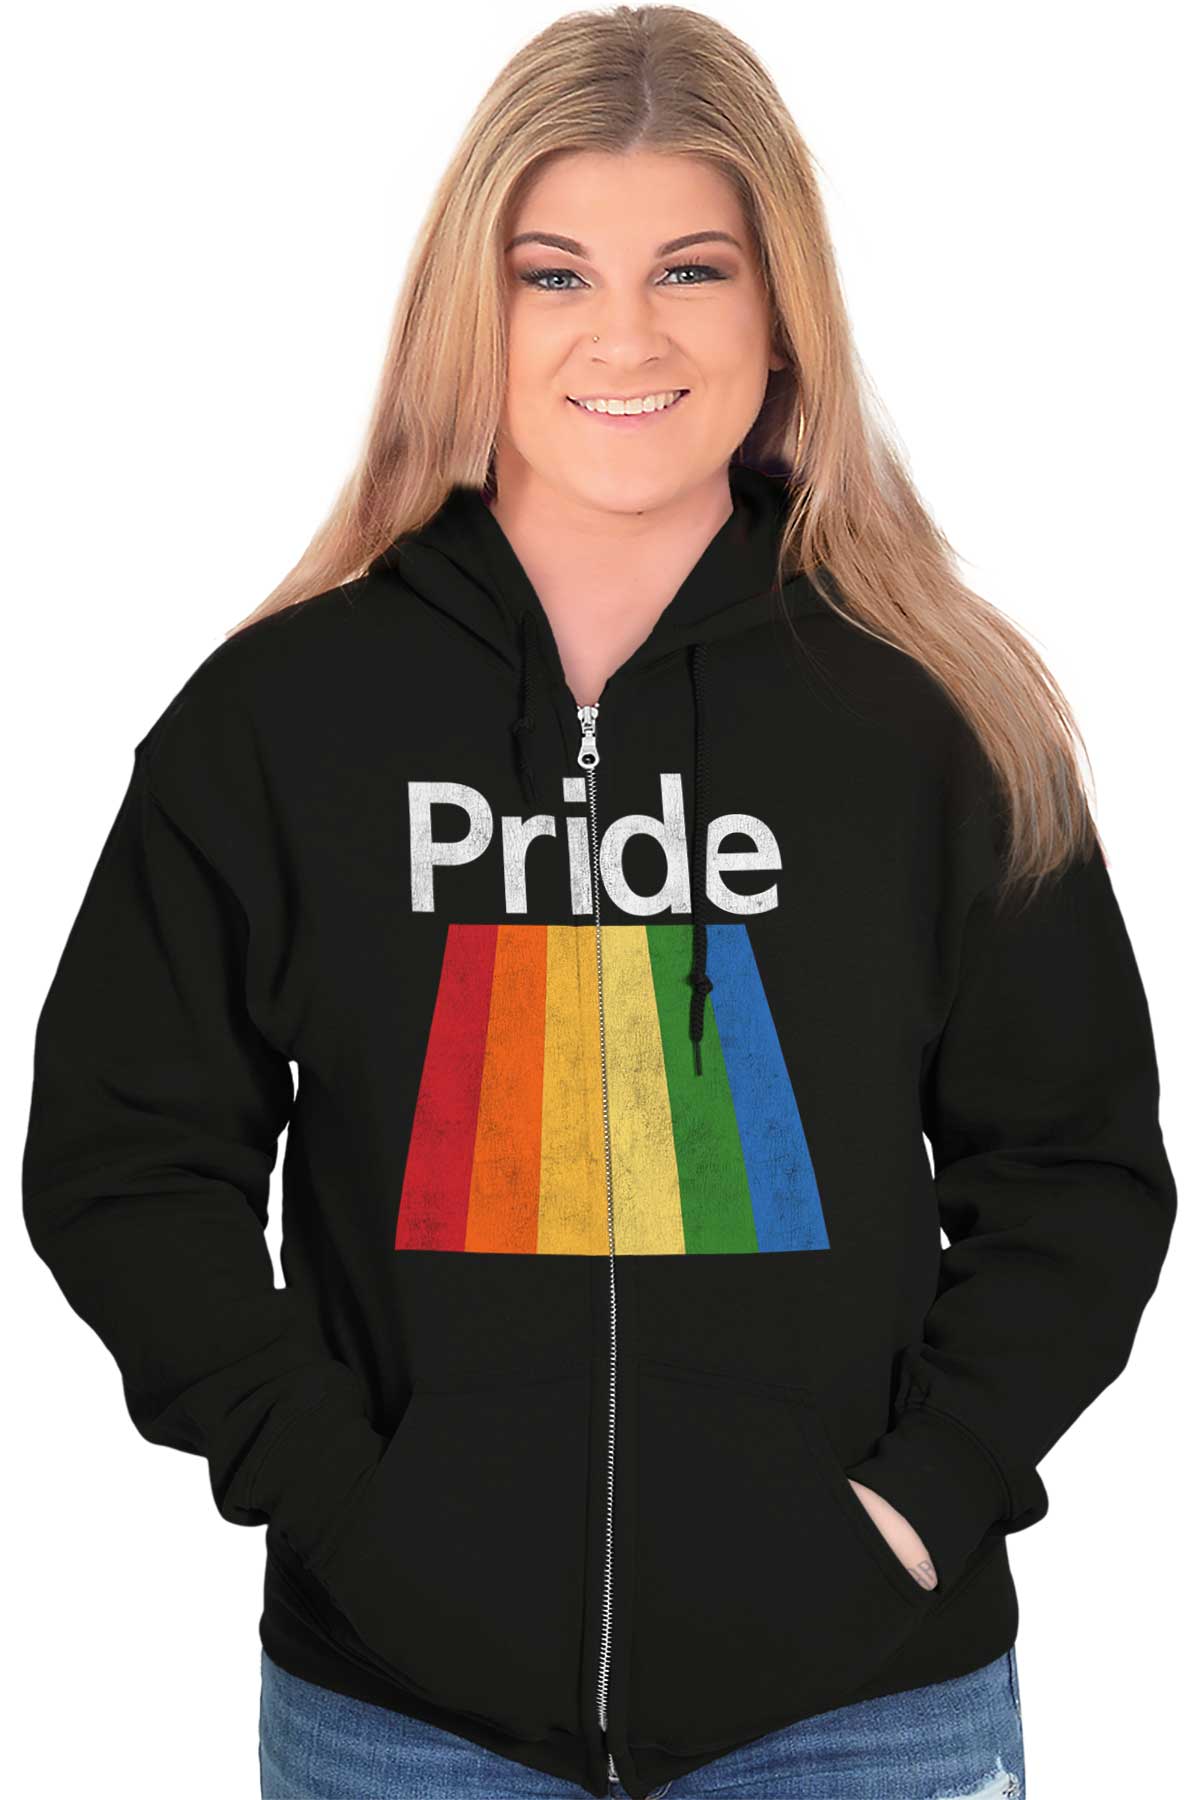 Gay Pride Rainbow Lgbtq Lesbian Rights Parade Adult Zip Hoodie Jacket Sweatshirt Ebay 7018